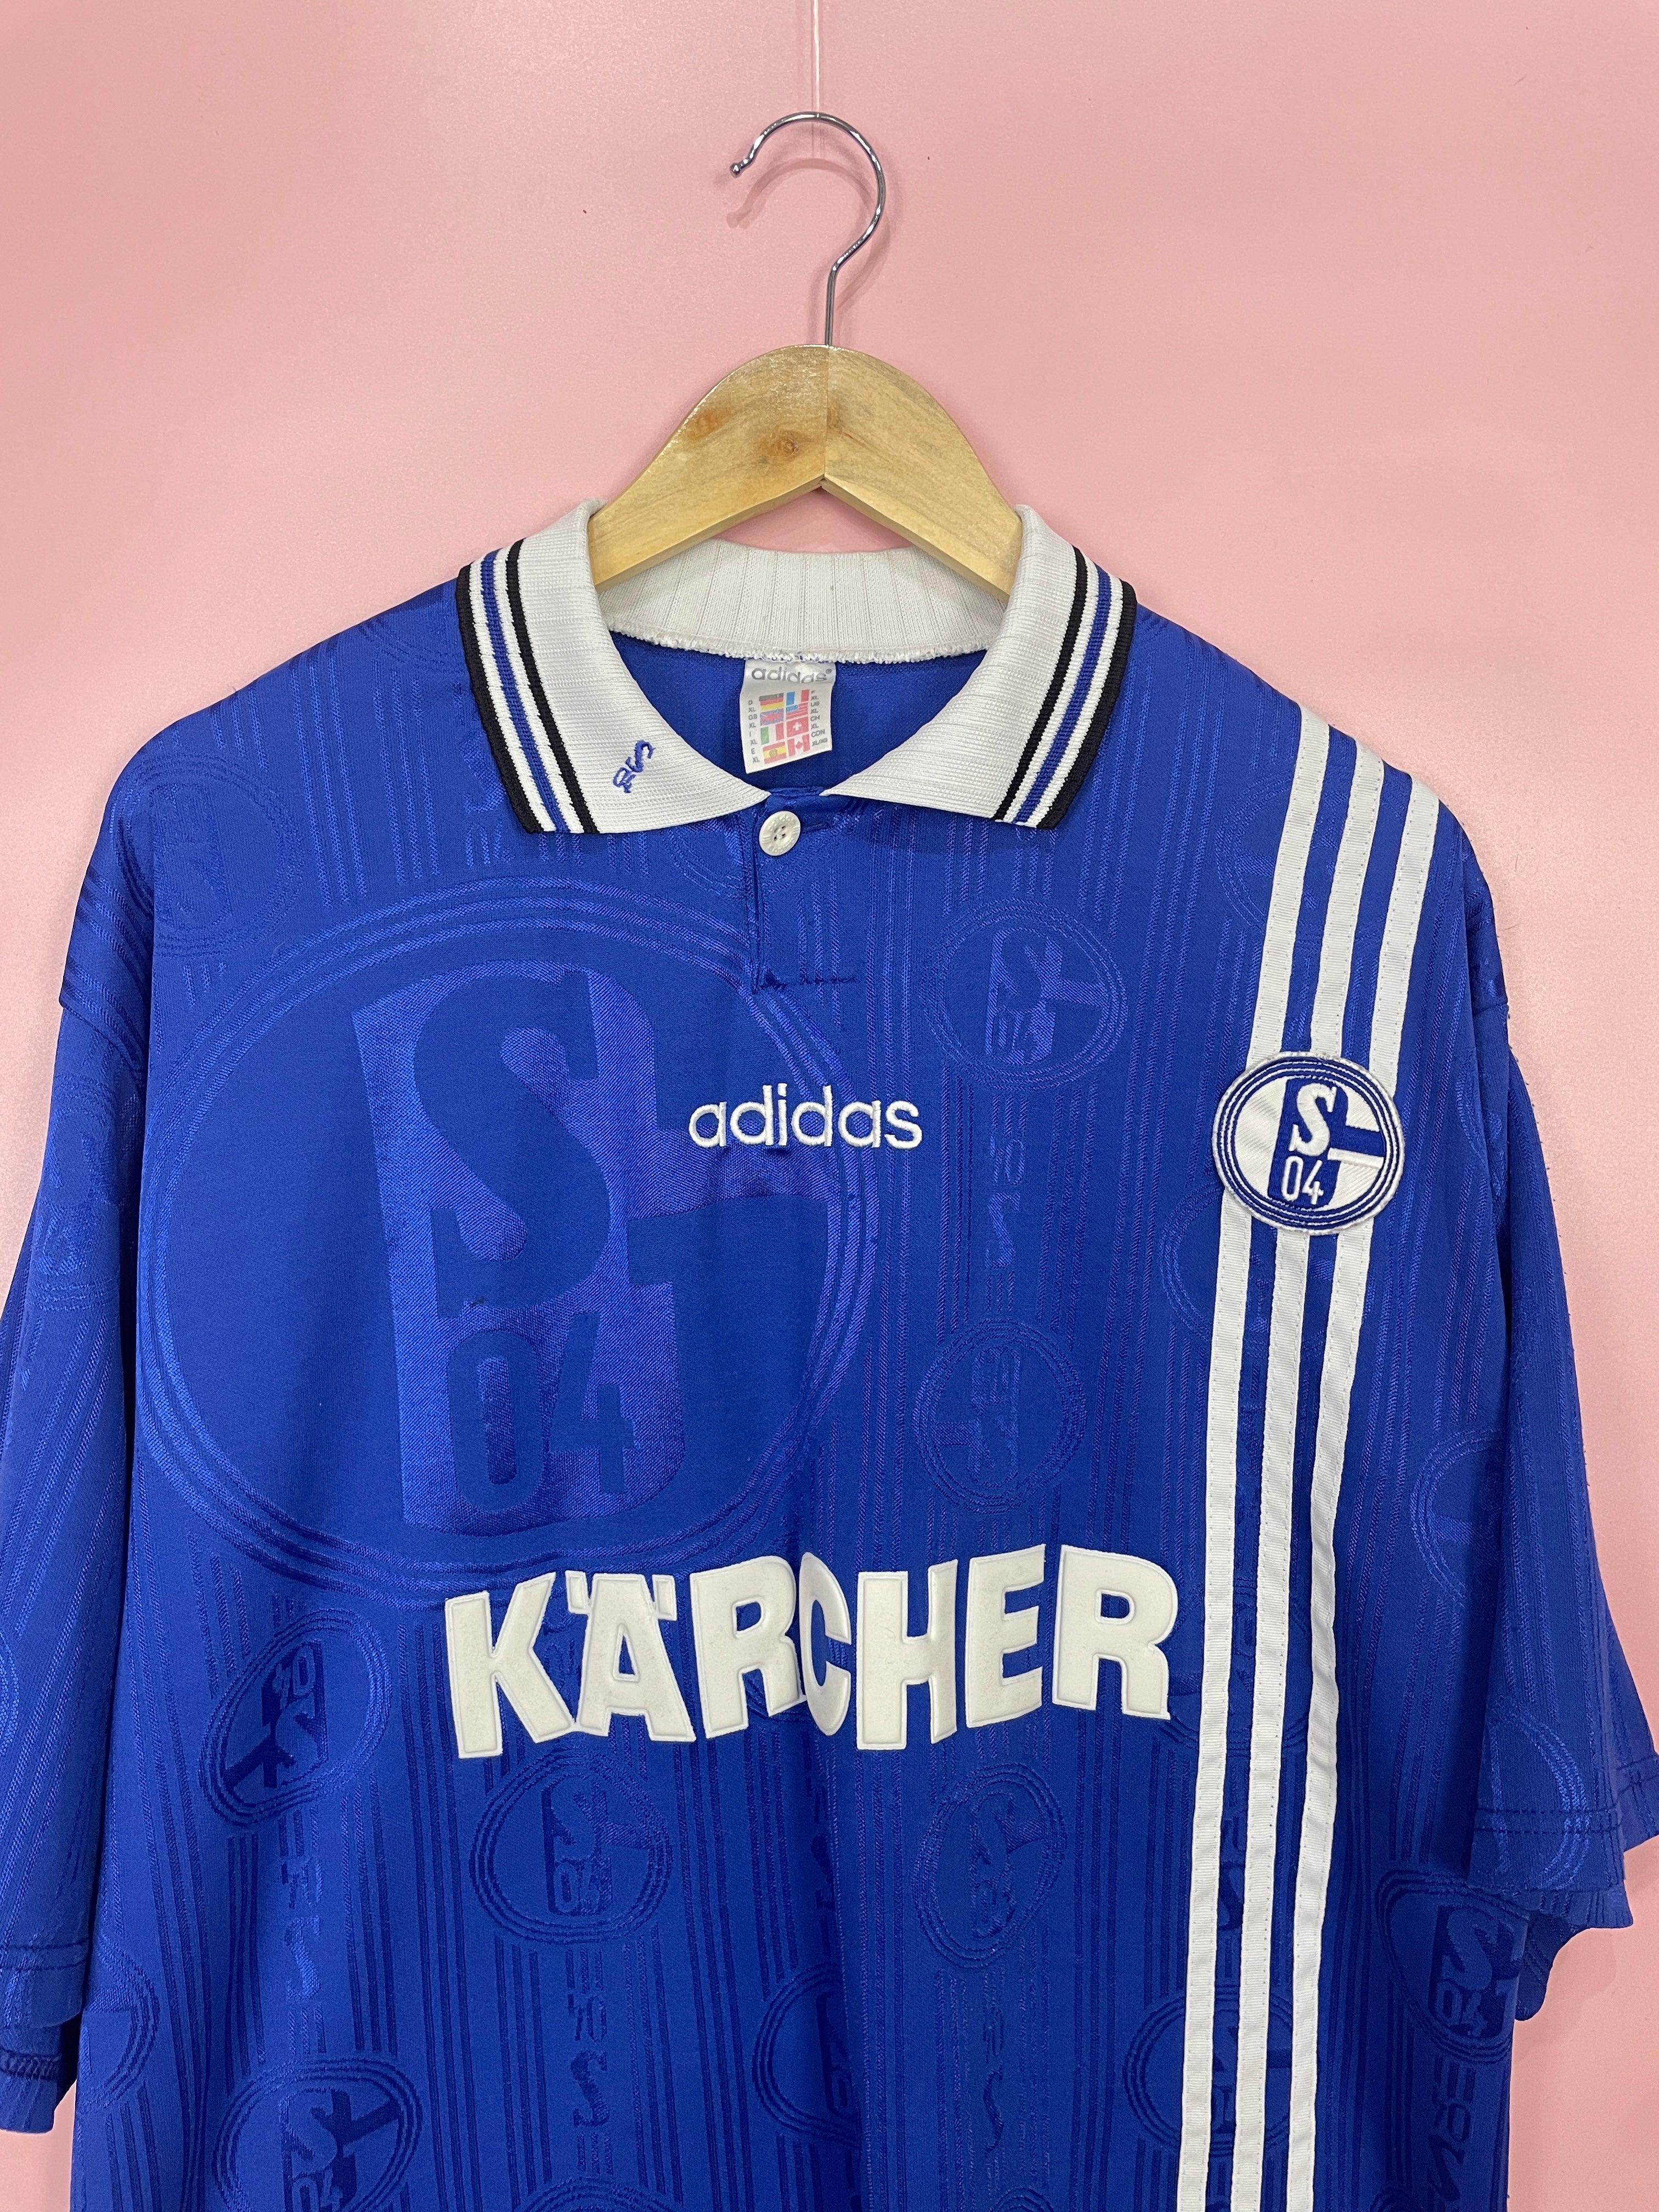 FC Schalke 04 Trikot 1996/1997 Original Adidas Kärcher Gr. XL